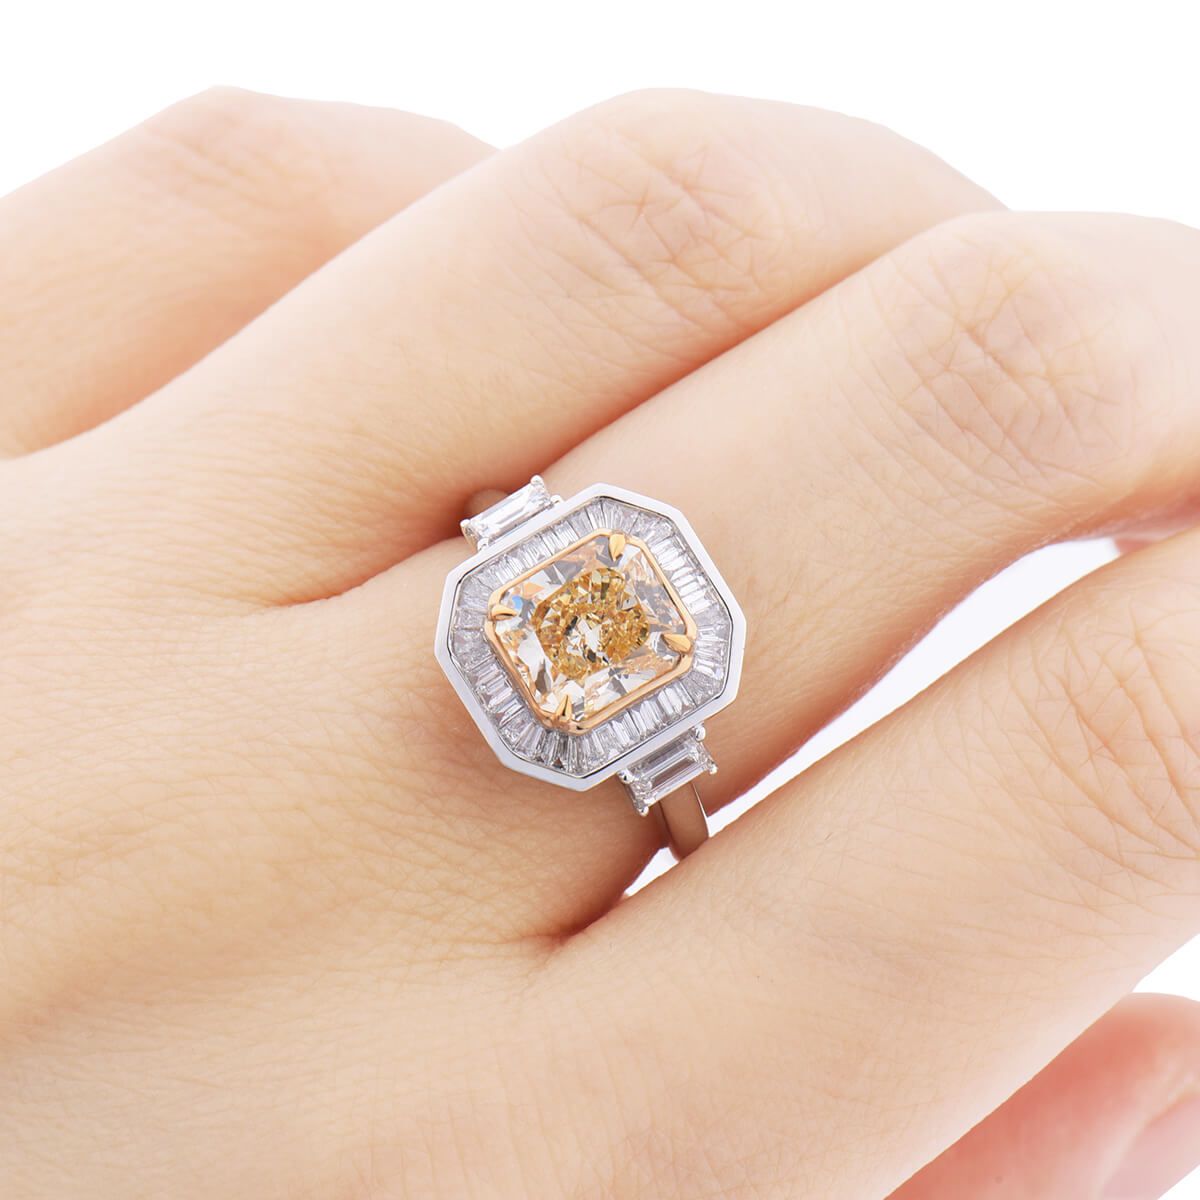 Fancy Orange Yellow Diamond Ring, 2.16 Ct. (2.83 Ct. TW), Radiant shape, GIA Certified, 2165127467